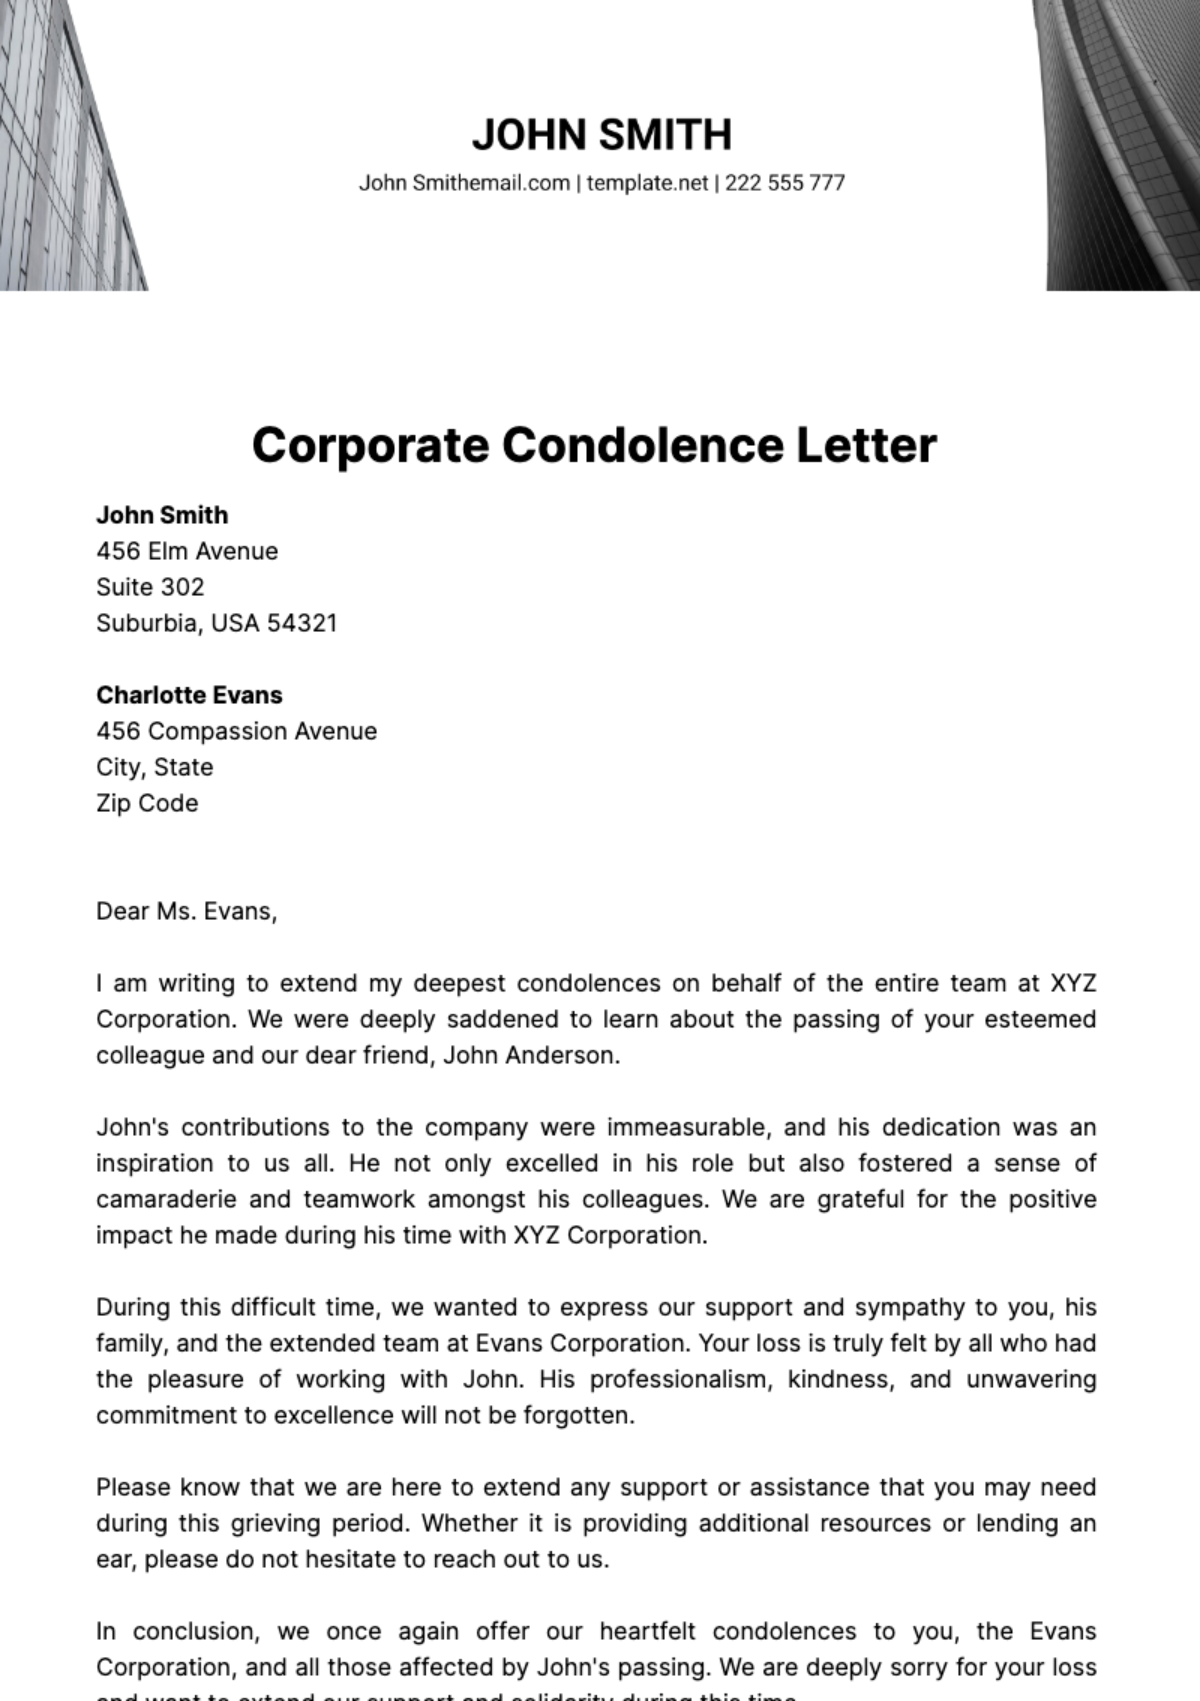 Free Corporate Condolence Letter Template